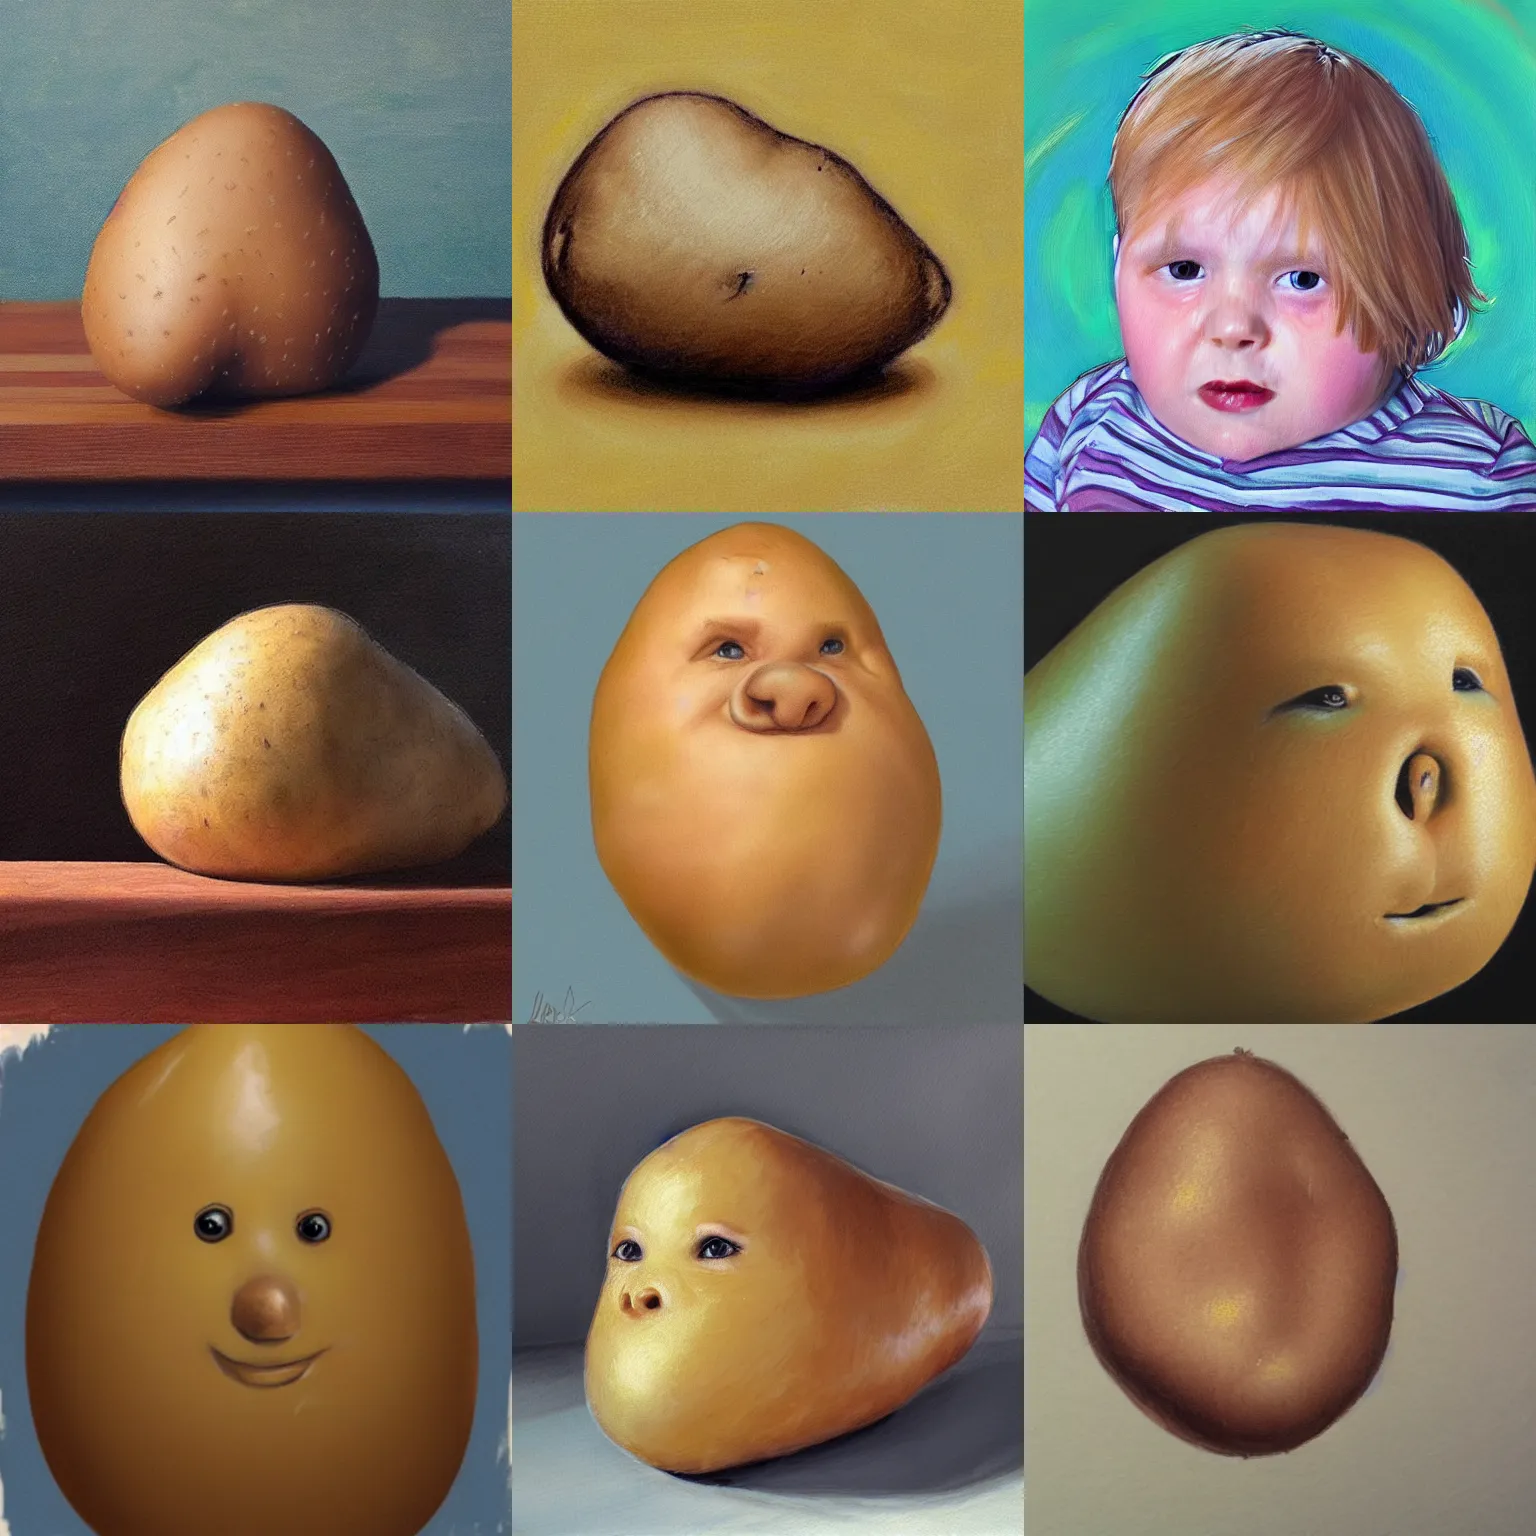 Prompt: hyper realistic portrait of a potato